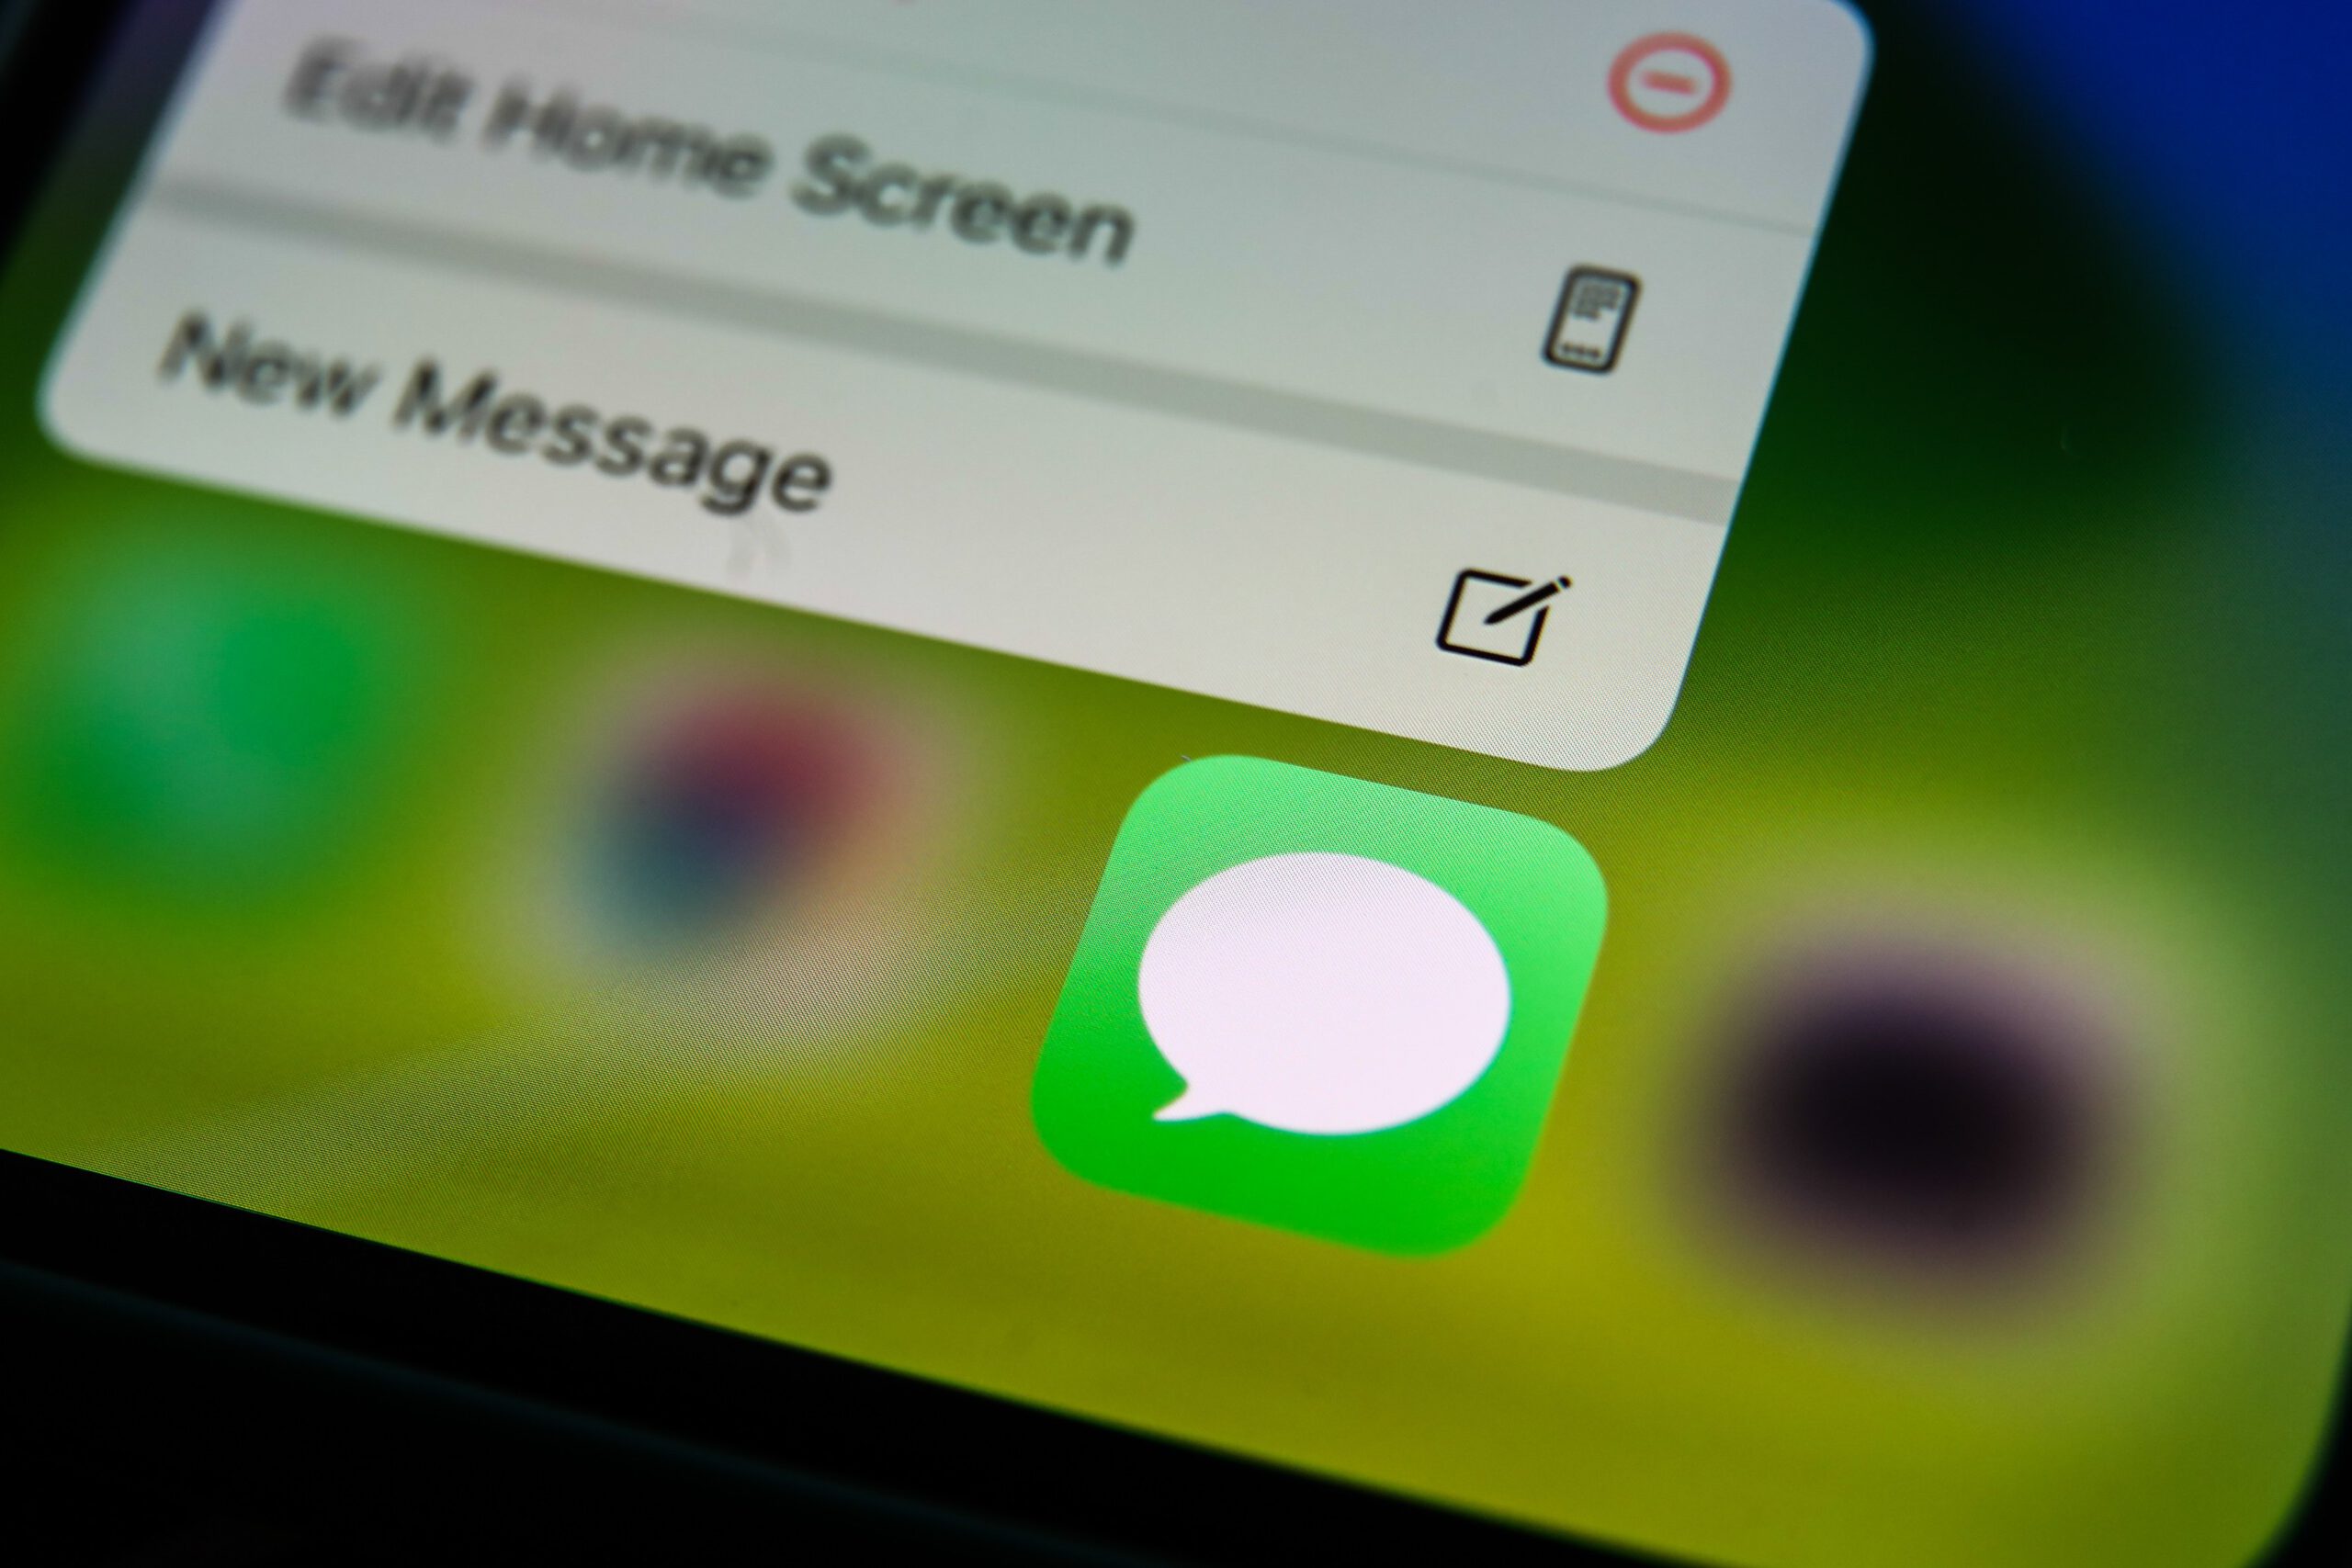 iphones messages app on screen